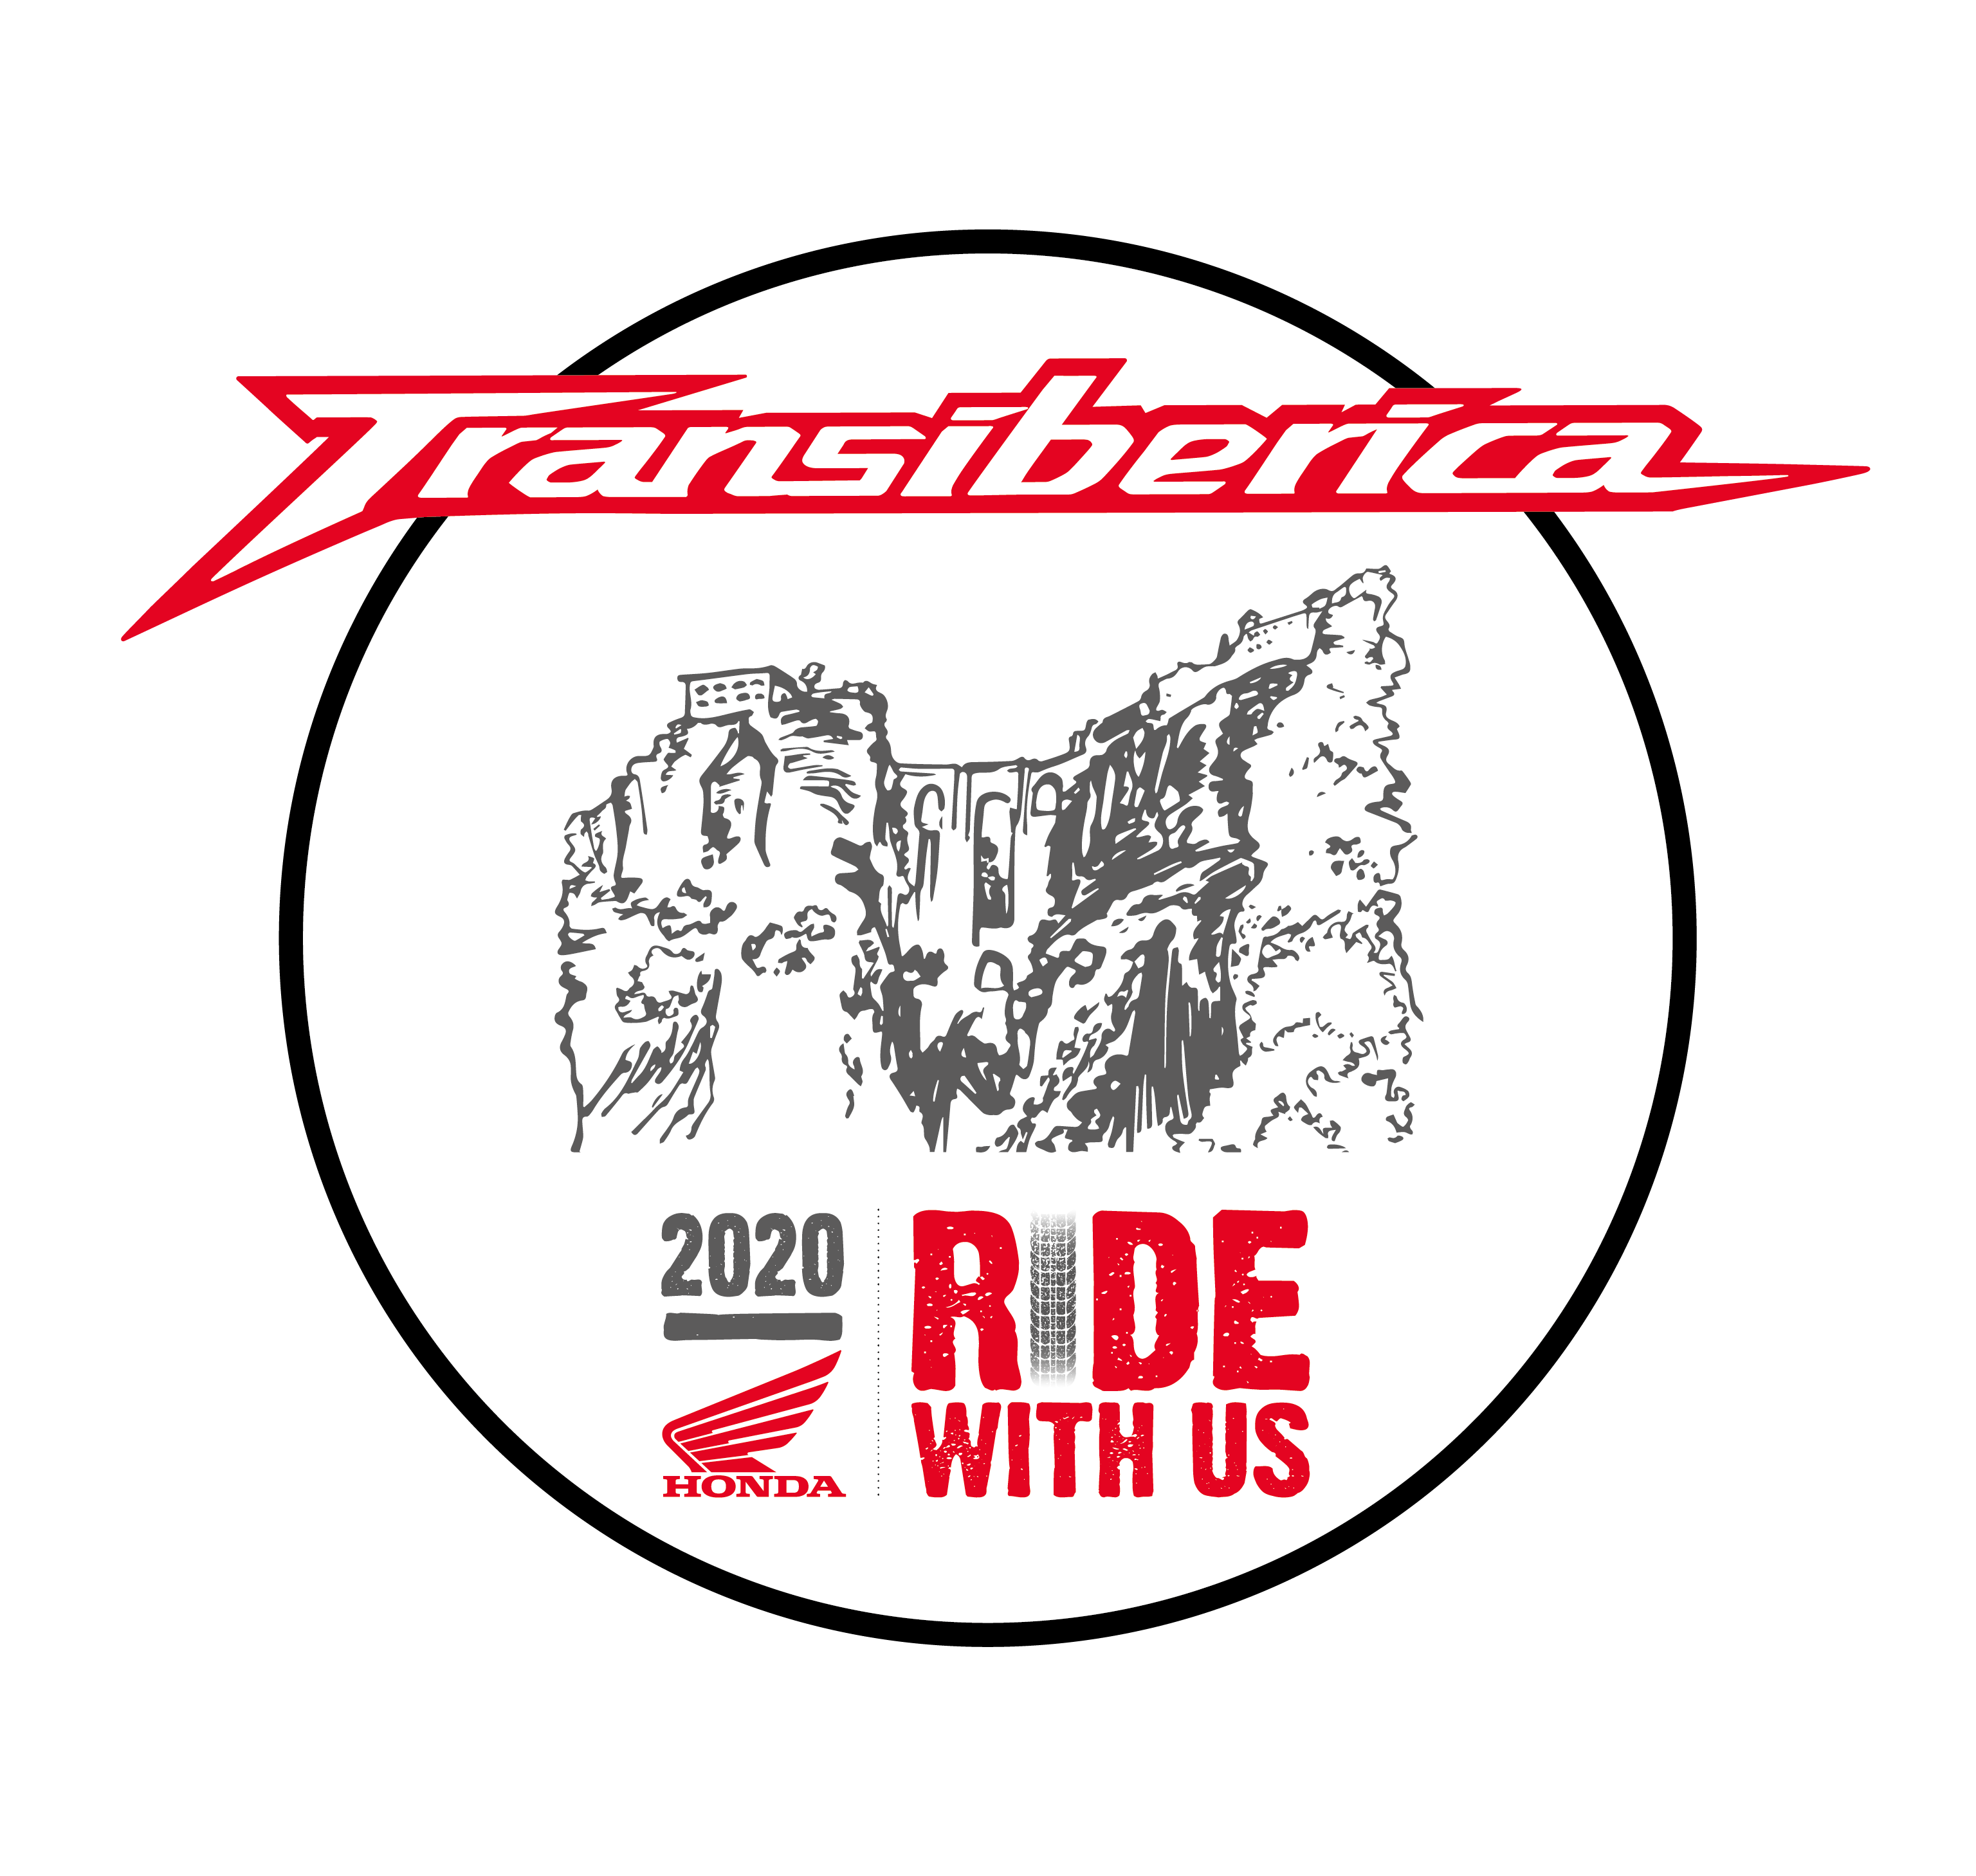 https://www.rideanddrive.travel/wp-content/uploads/2020/02/transiberica-logo-01.png